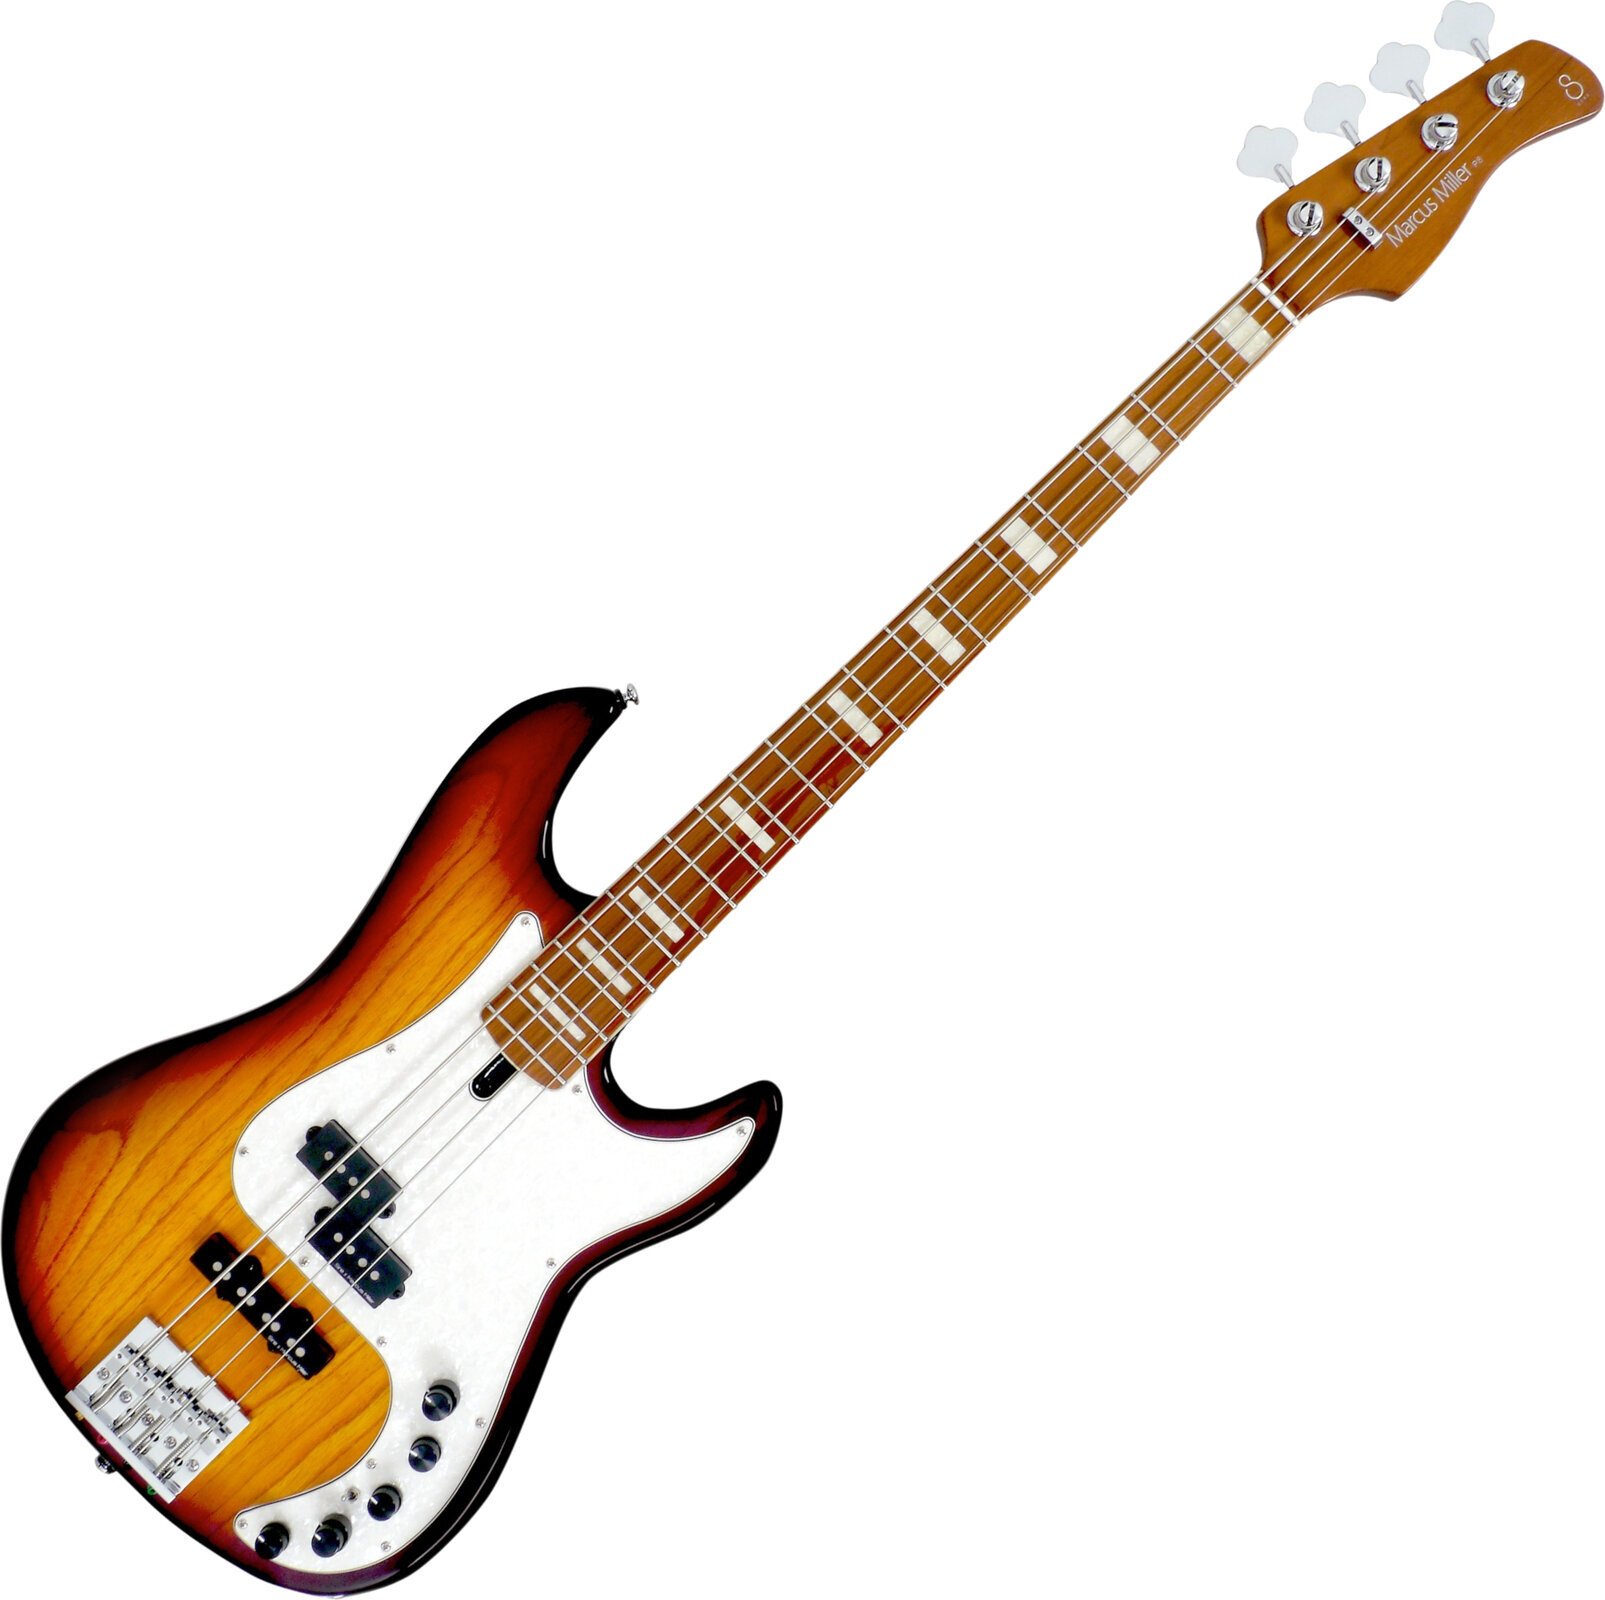 E-Bass Sire Marcus Miller P8-4